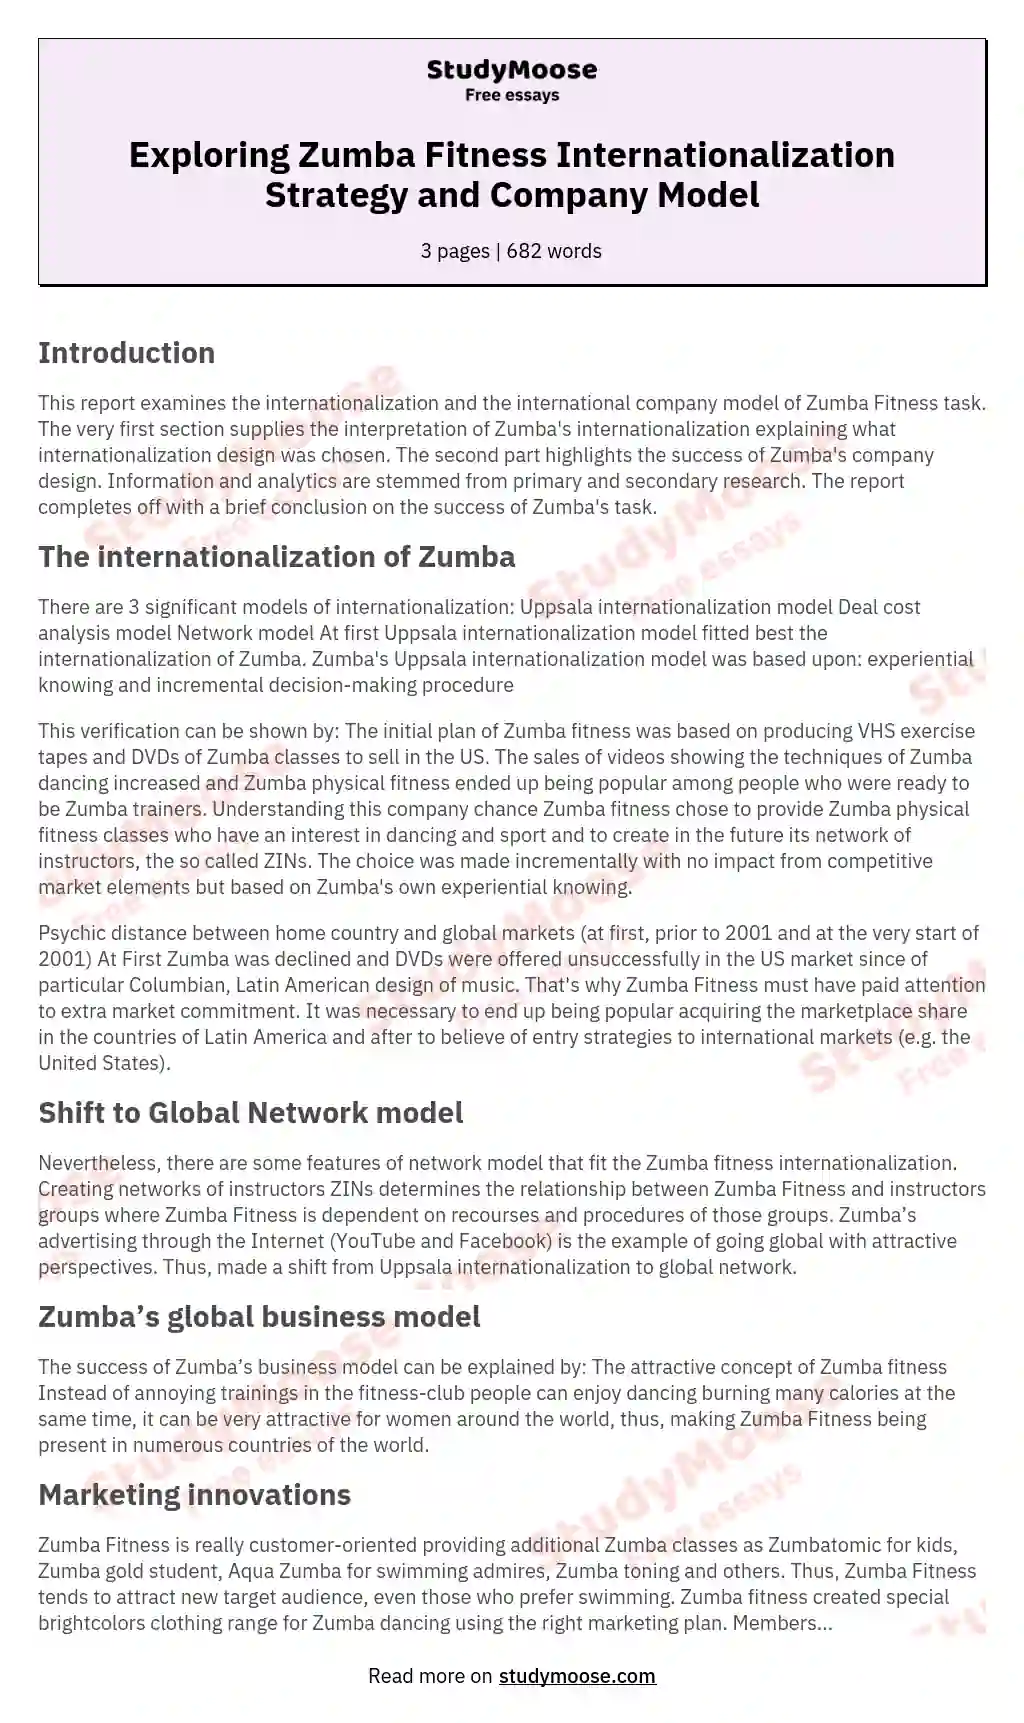 Exploring Zumba Fitness Internationalization Strategy and Company Model essay